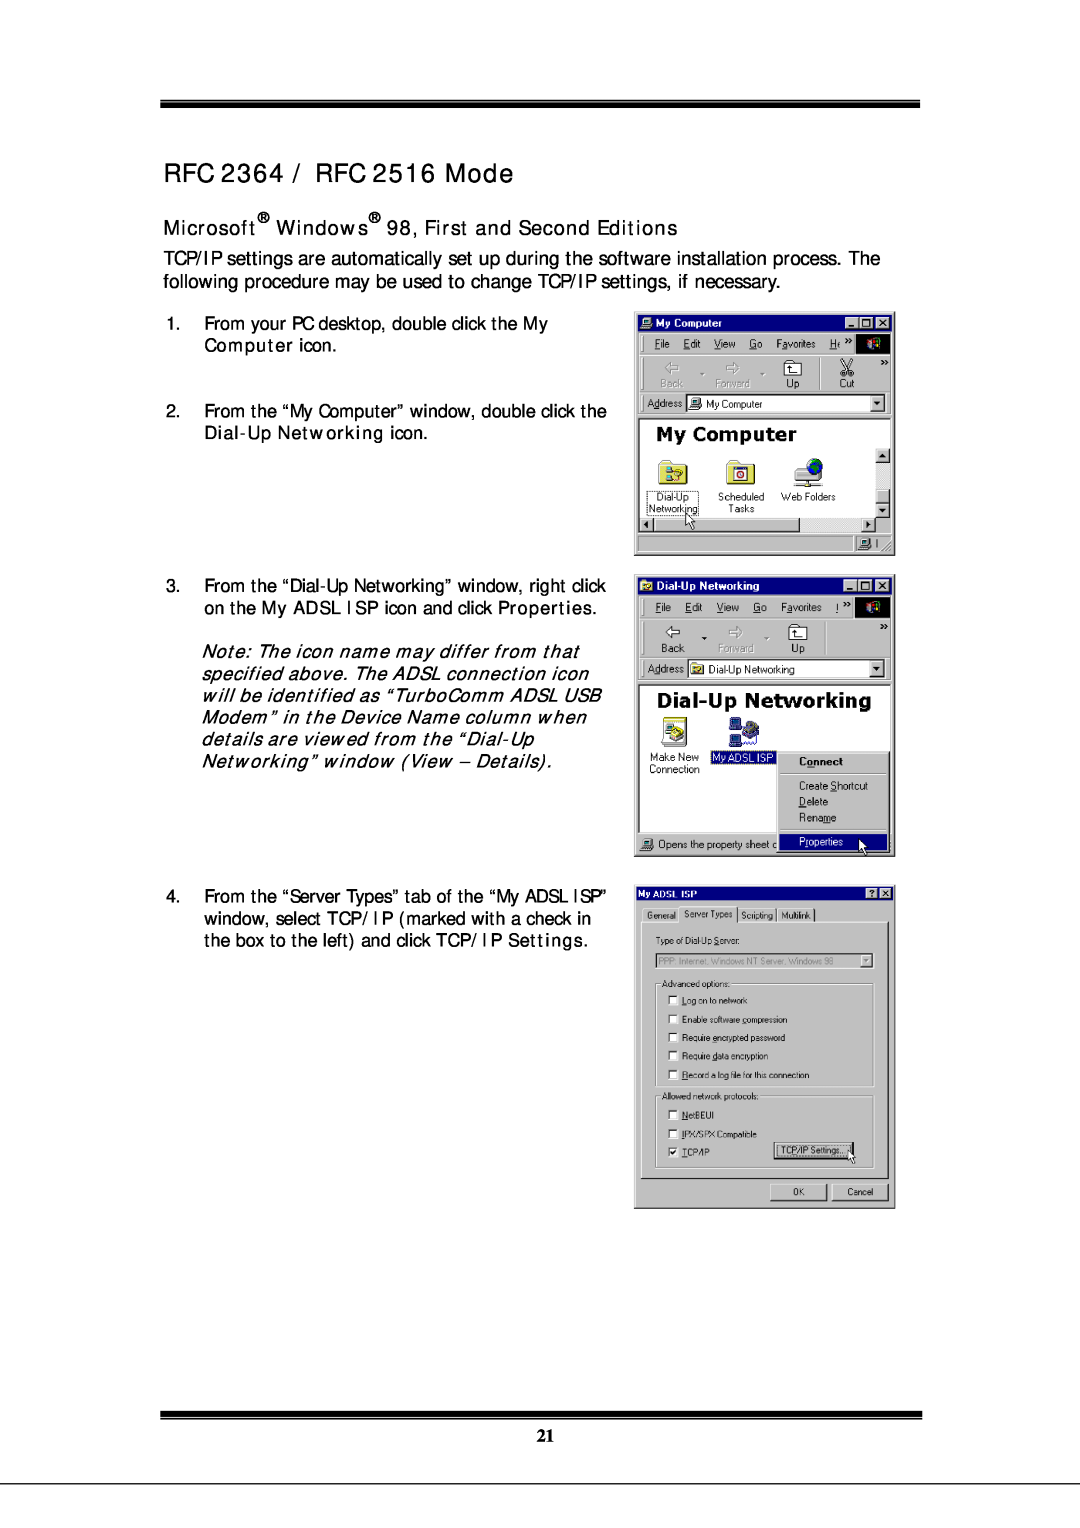 Microsoft EA900 manual RFC 2364 / RFC 2516 Mode, Microsoft Windows 98, First and Second Editions 